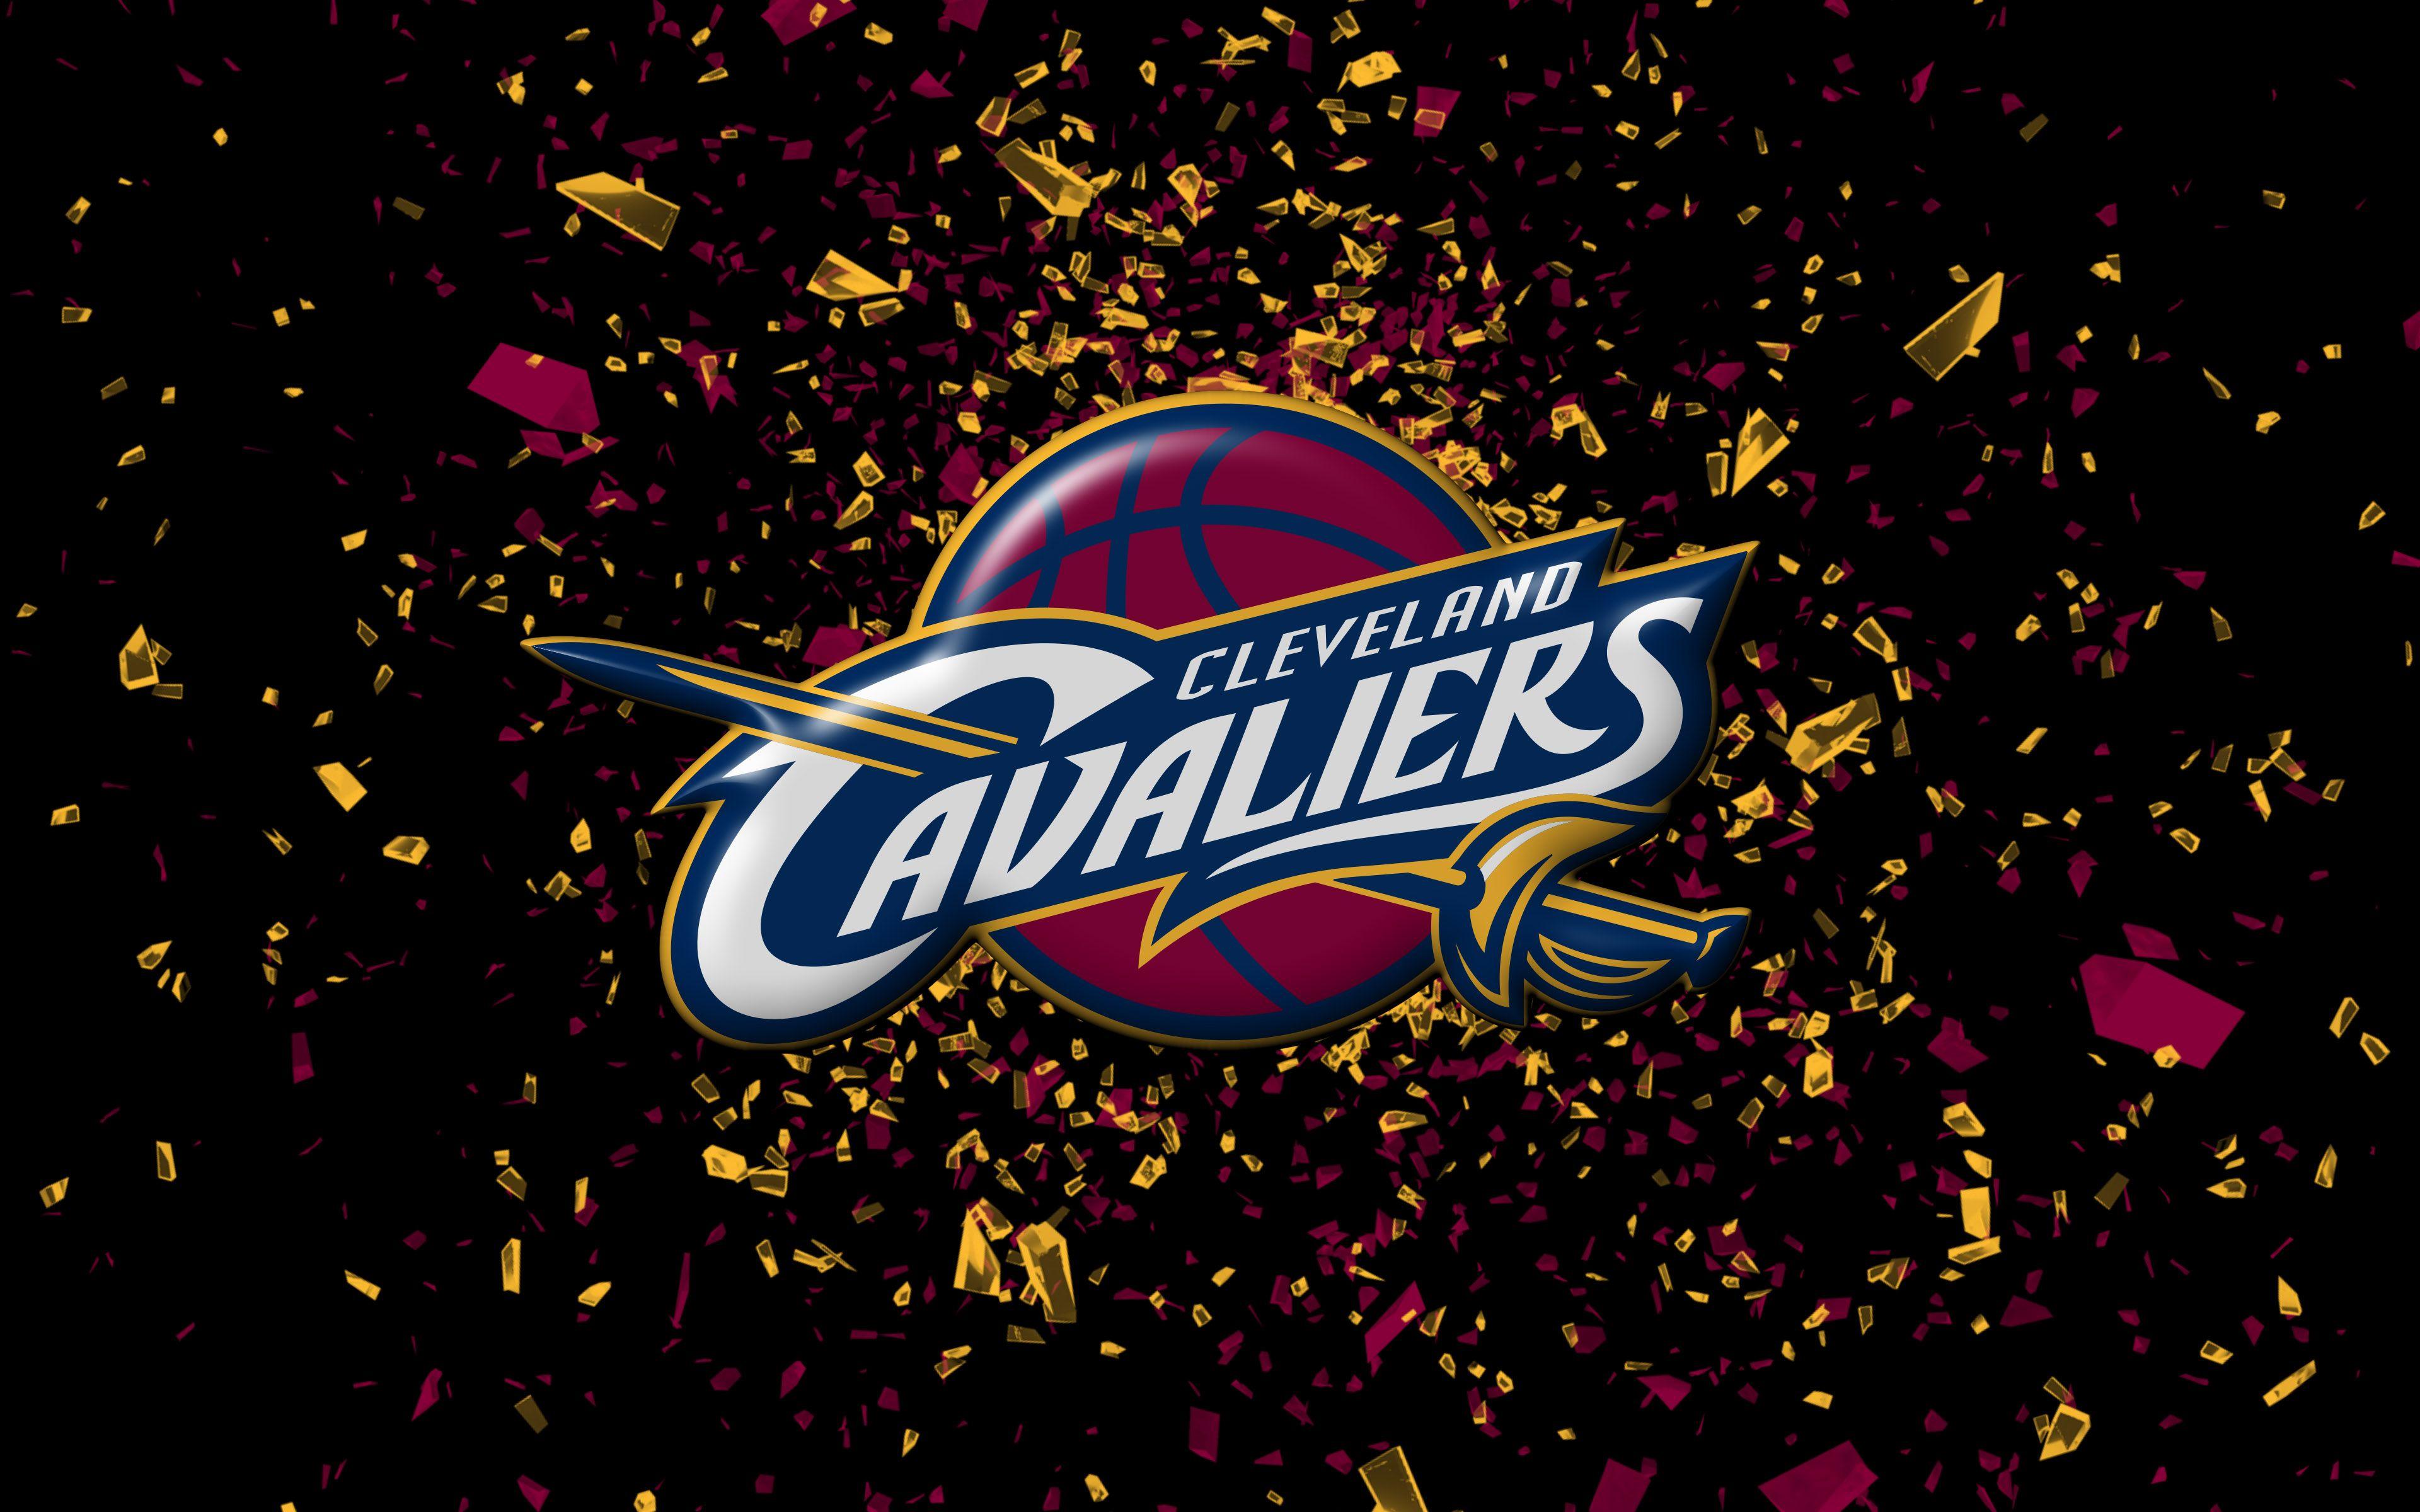 NBA Cleveland Cavaliers Logo wallpaper 2018 in Basketball